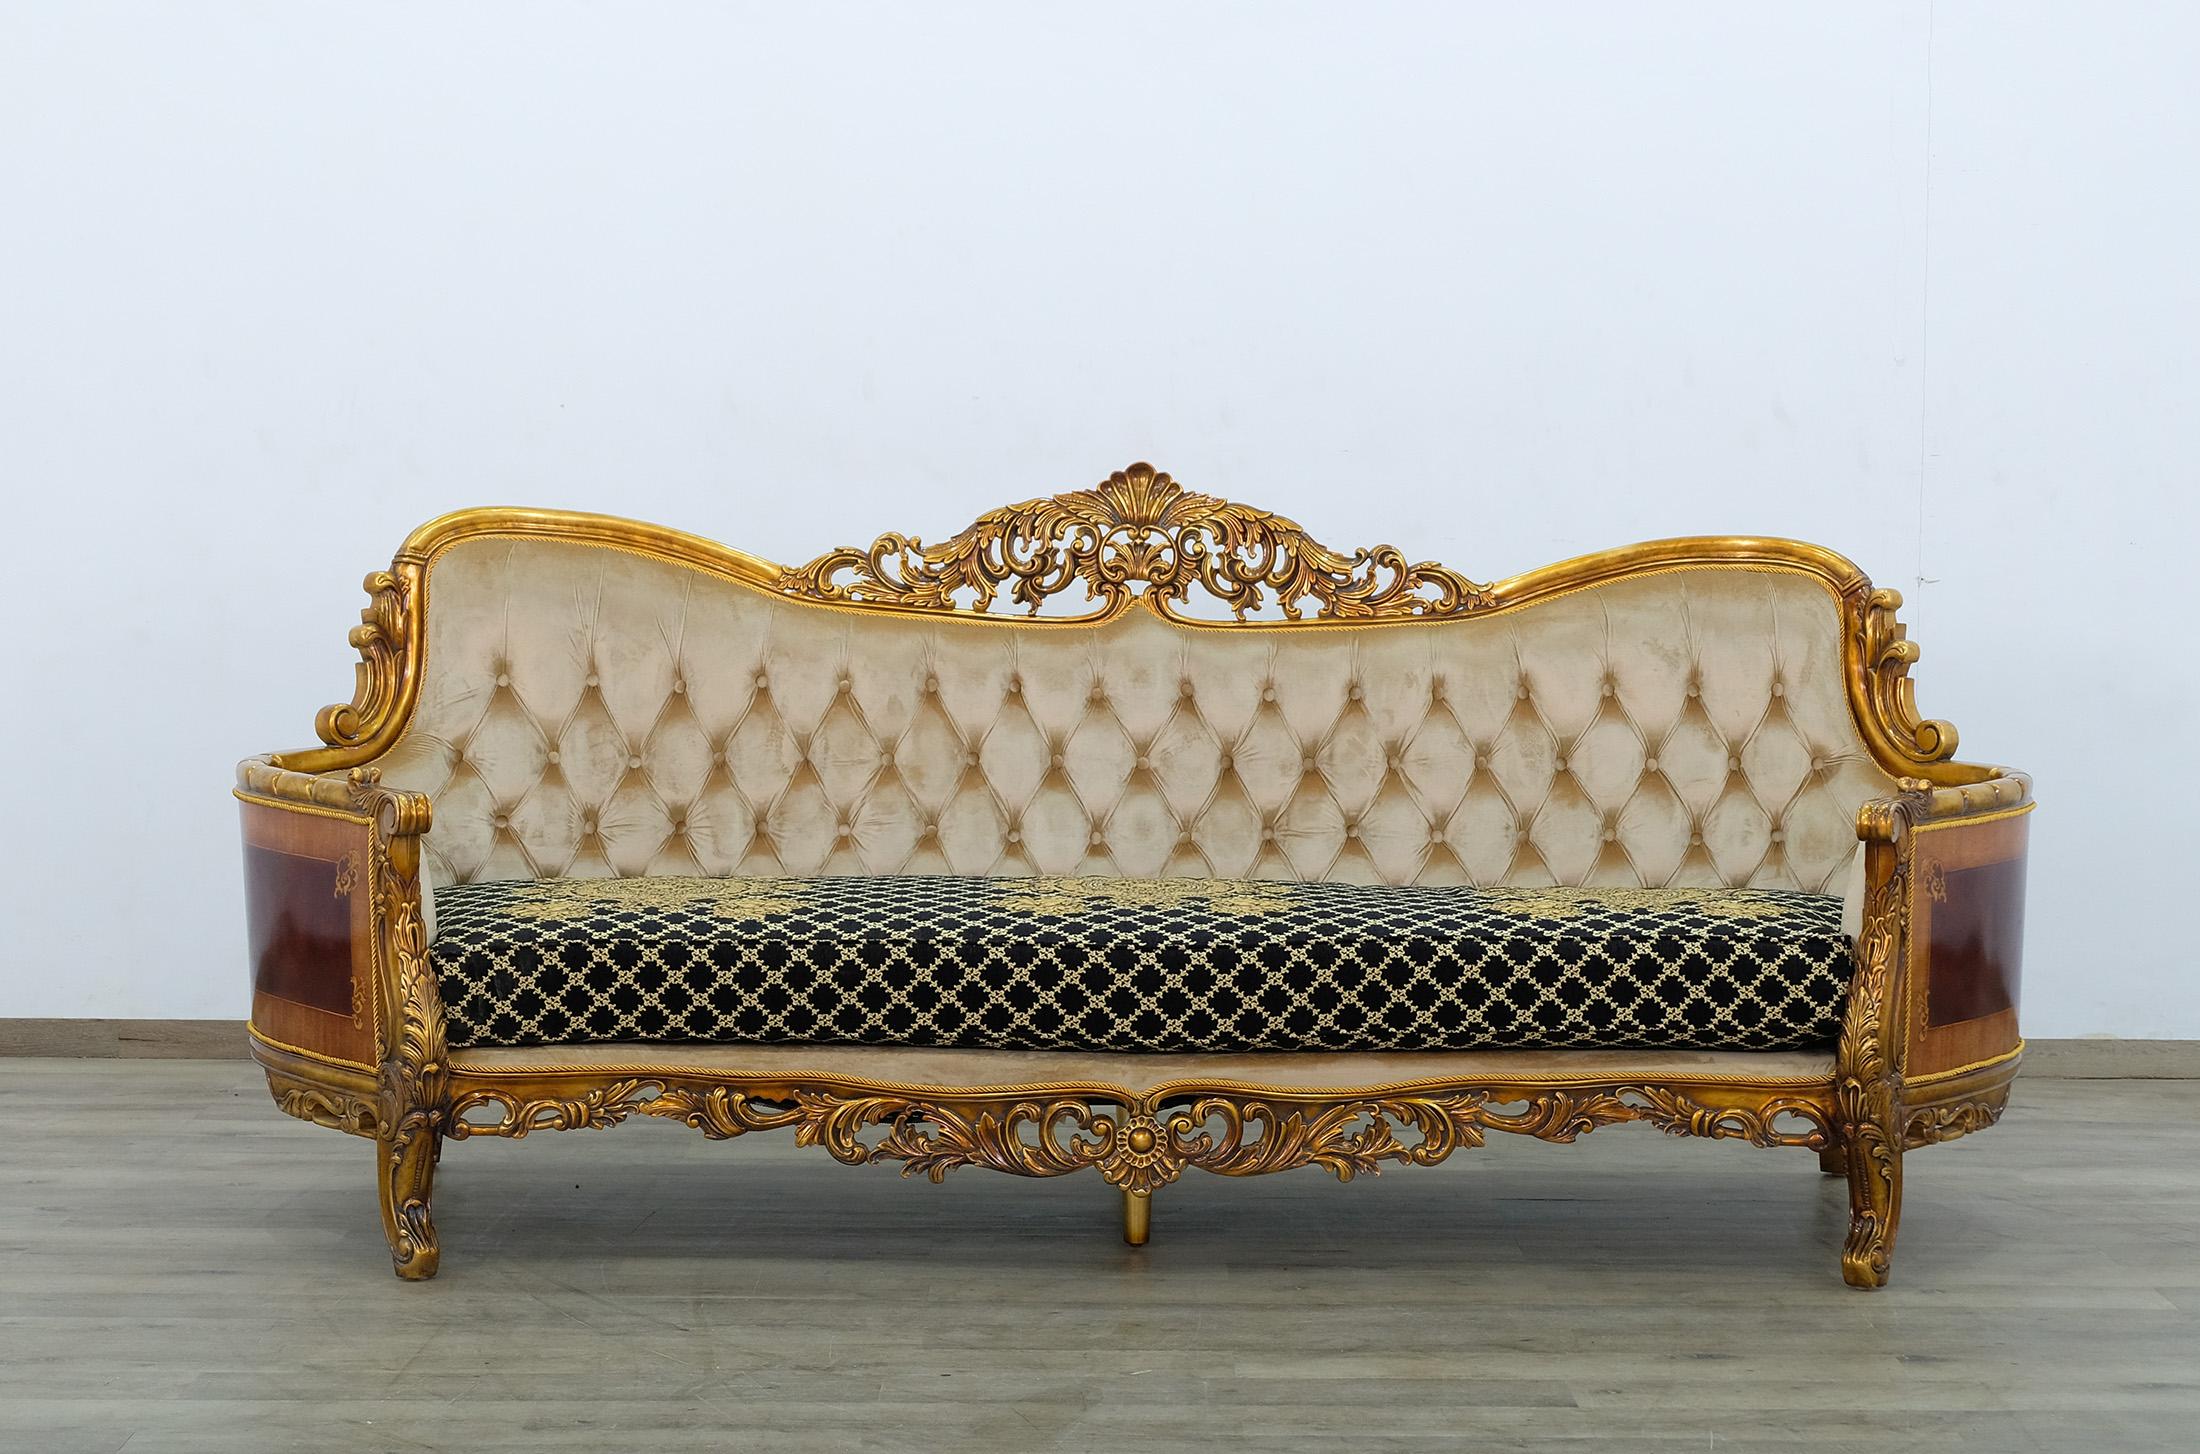 

    
Royal Luxury Black Gold Fabric MAGGIOLINI Sofa EUROPEAN FURNITURE Carved Wood
